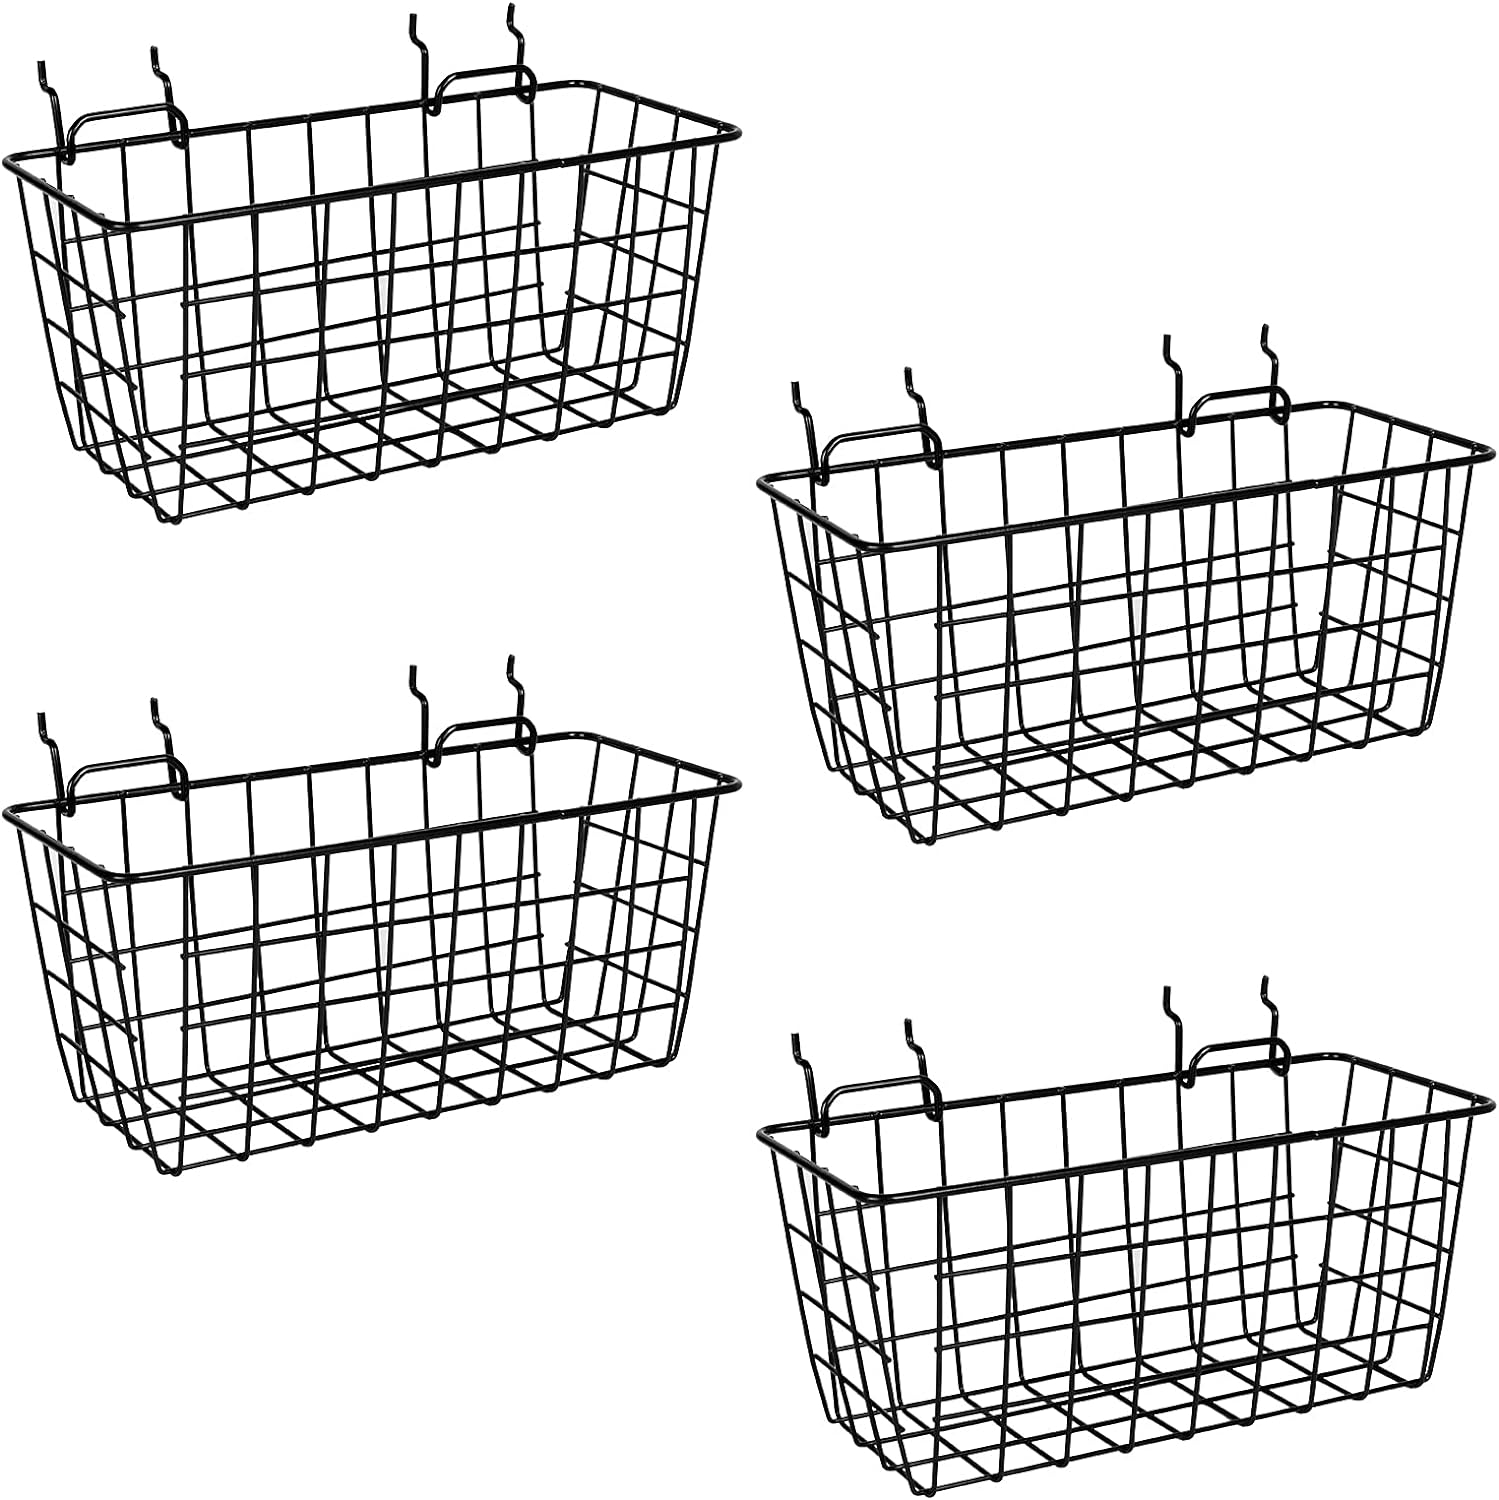 G.CORE 4 Pack Pegboard Baskets, Black Metal Shelves Hooks to 1/8" and 1/4" Hole Peg Boards, Peg Board Baskets Bins Set - Org